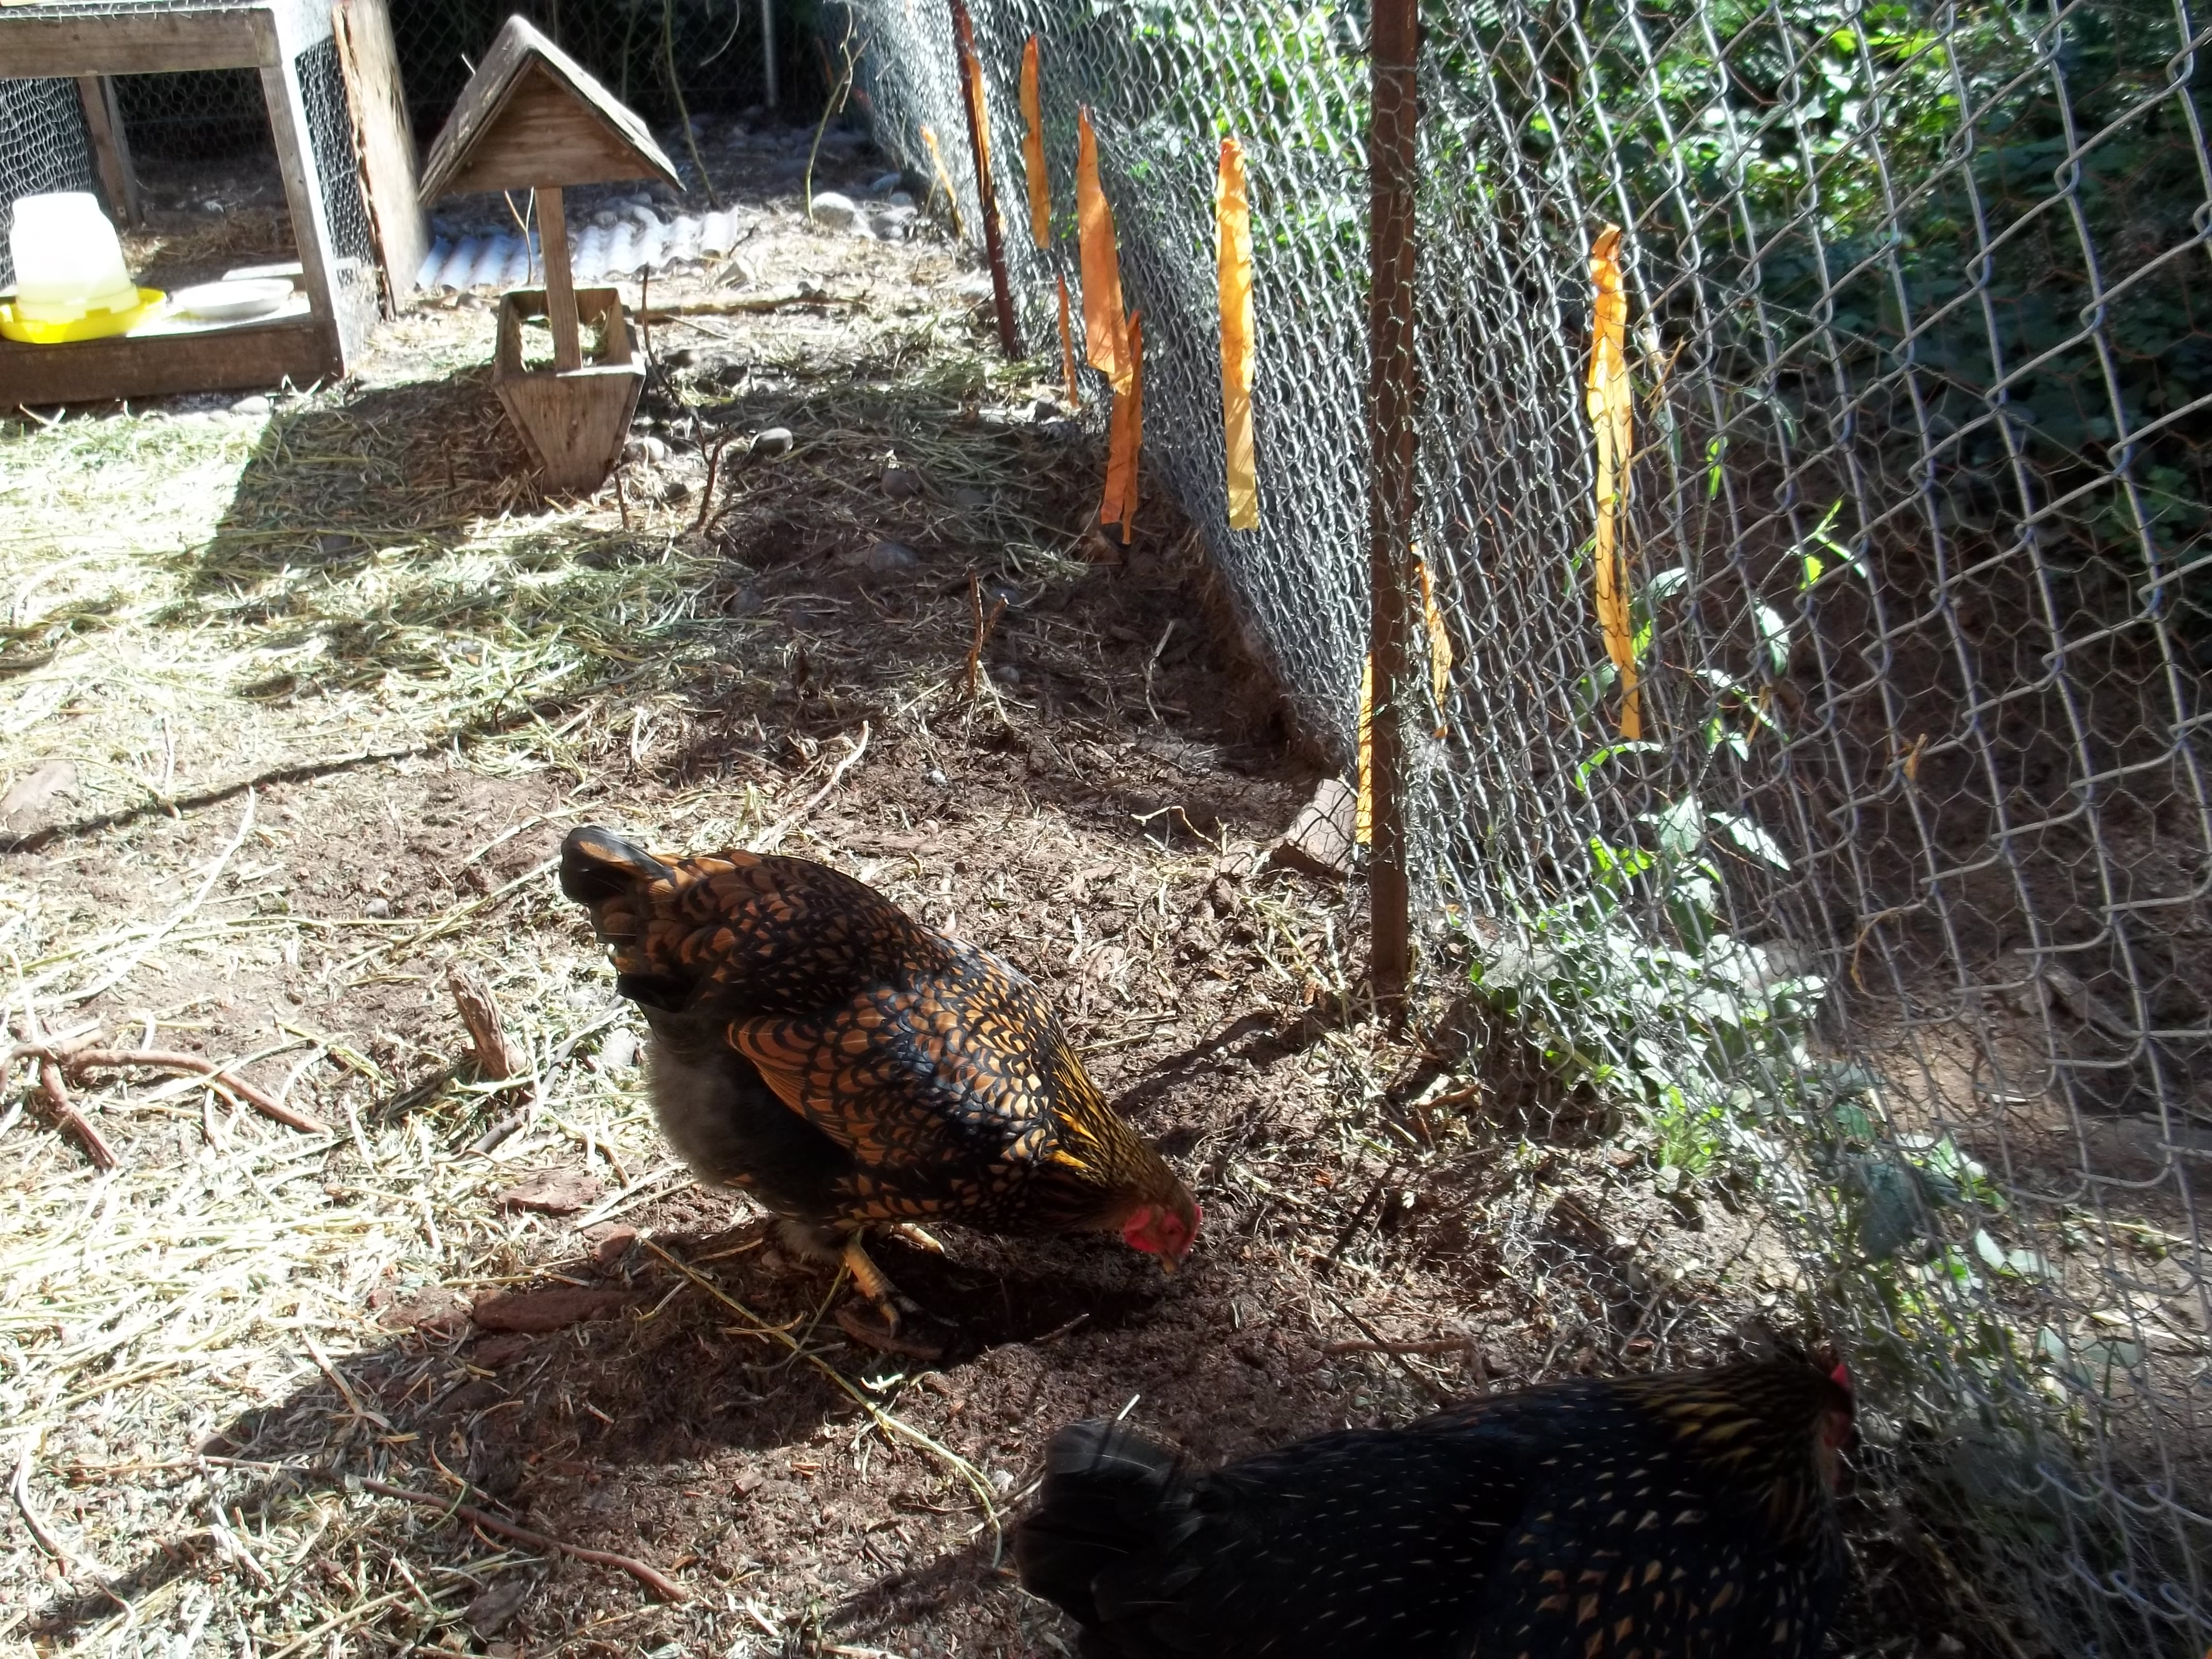 Goldie enjoying the sunshine in part of the chicken runn.